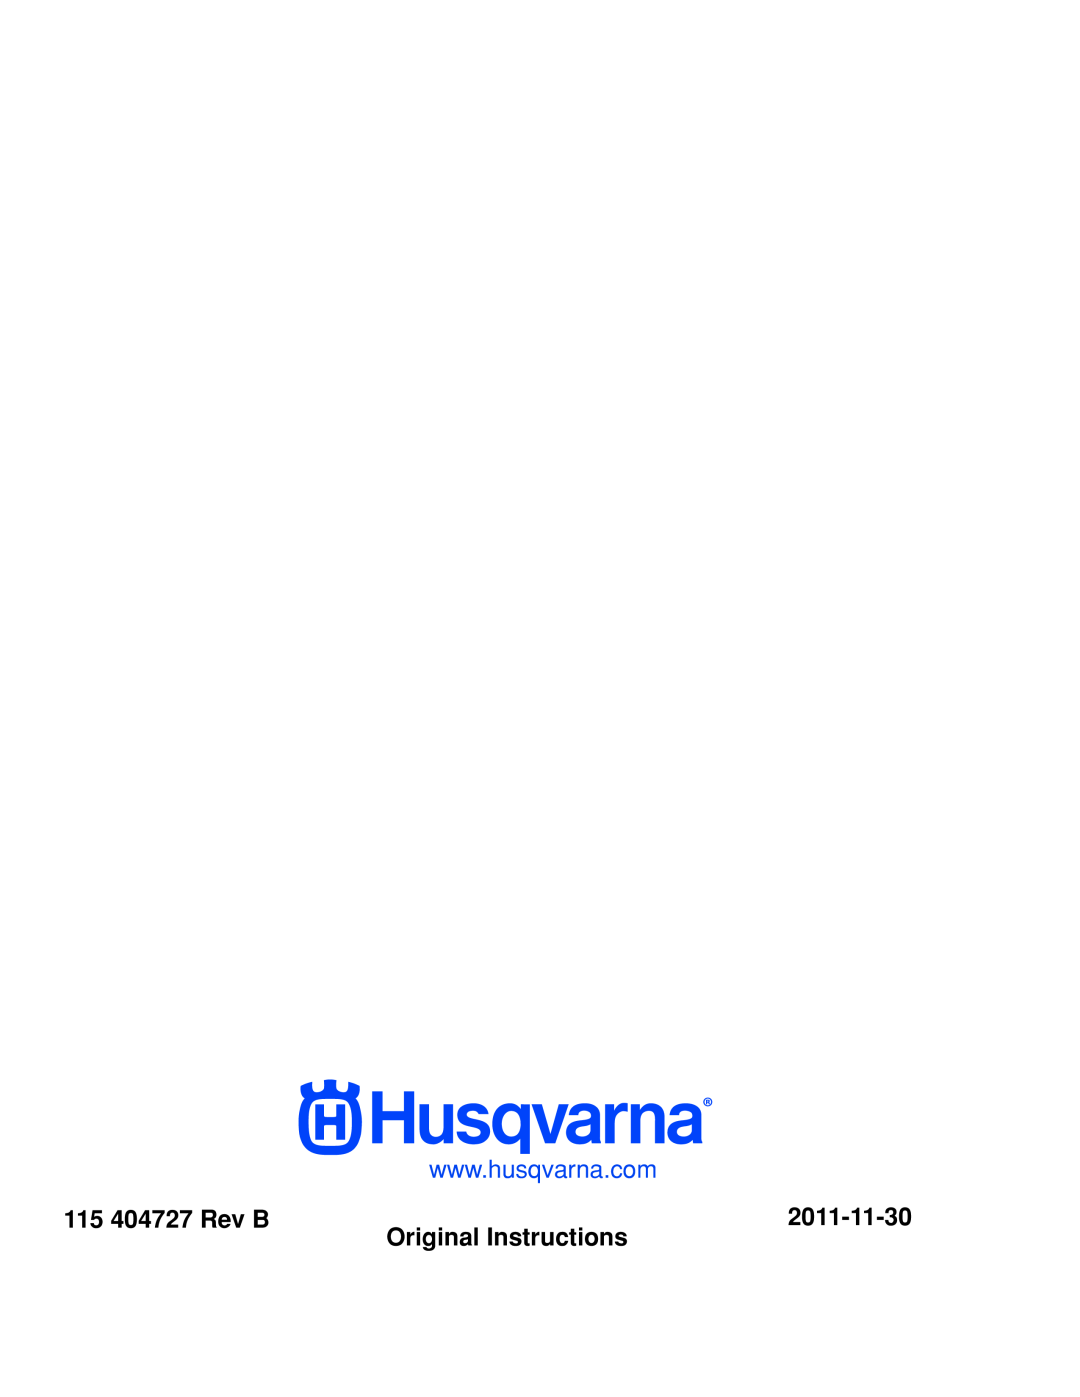 Husqvarna 966616701, PZ29D CE manual 115 404727 Rev B, Original Instructions, 2011-11-30 